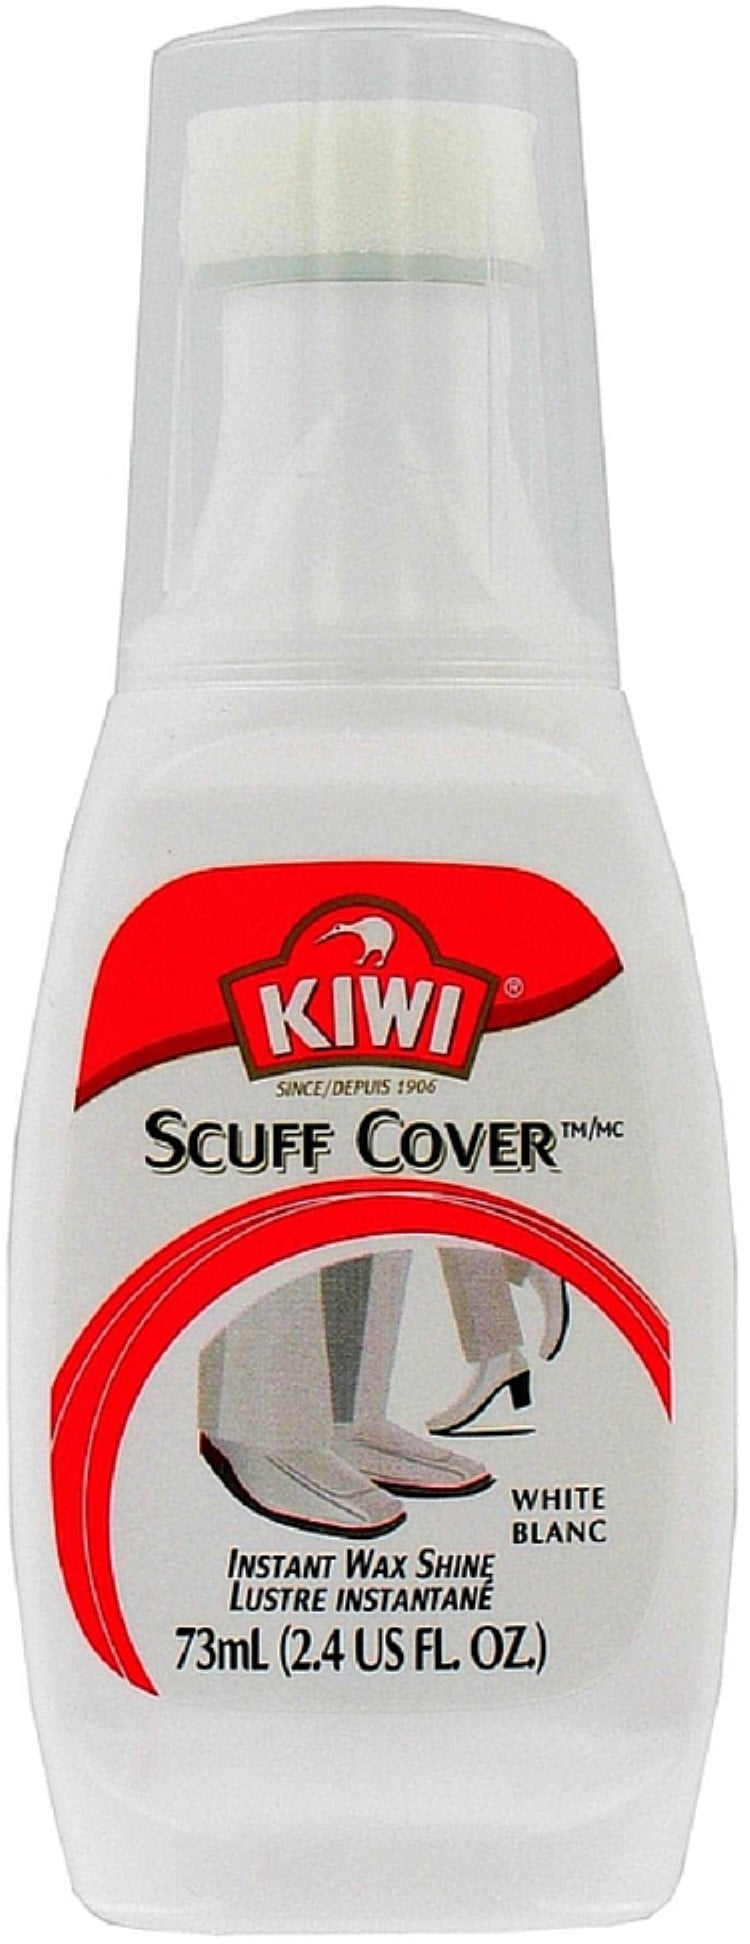 2 Pack - KIWI Scuff Cover, White 2.40 